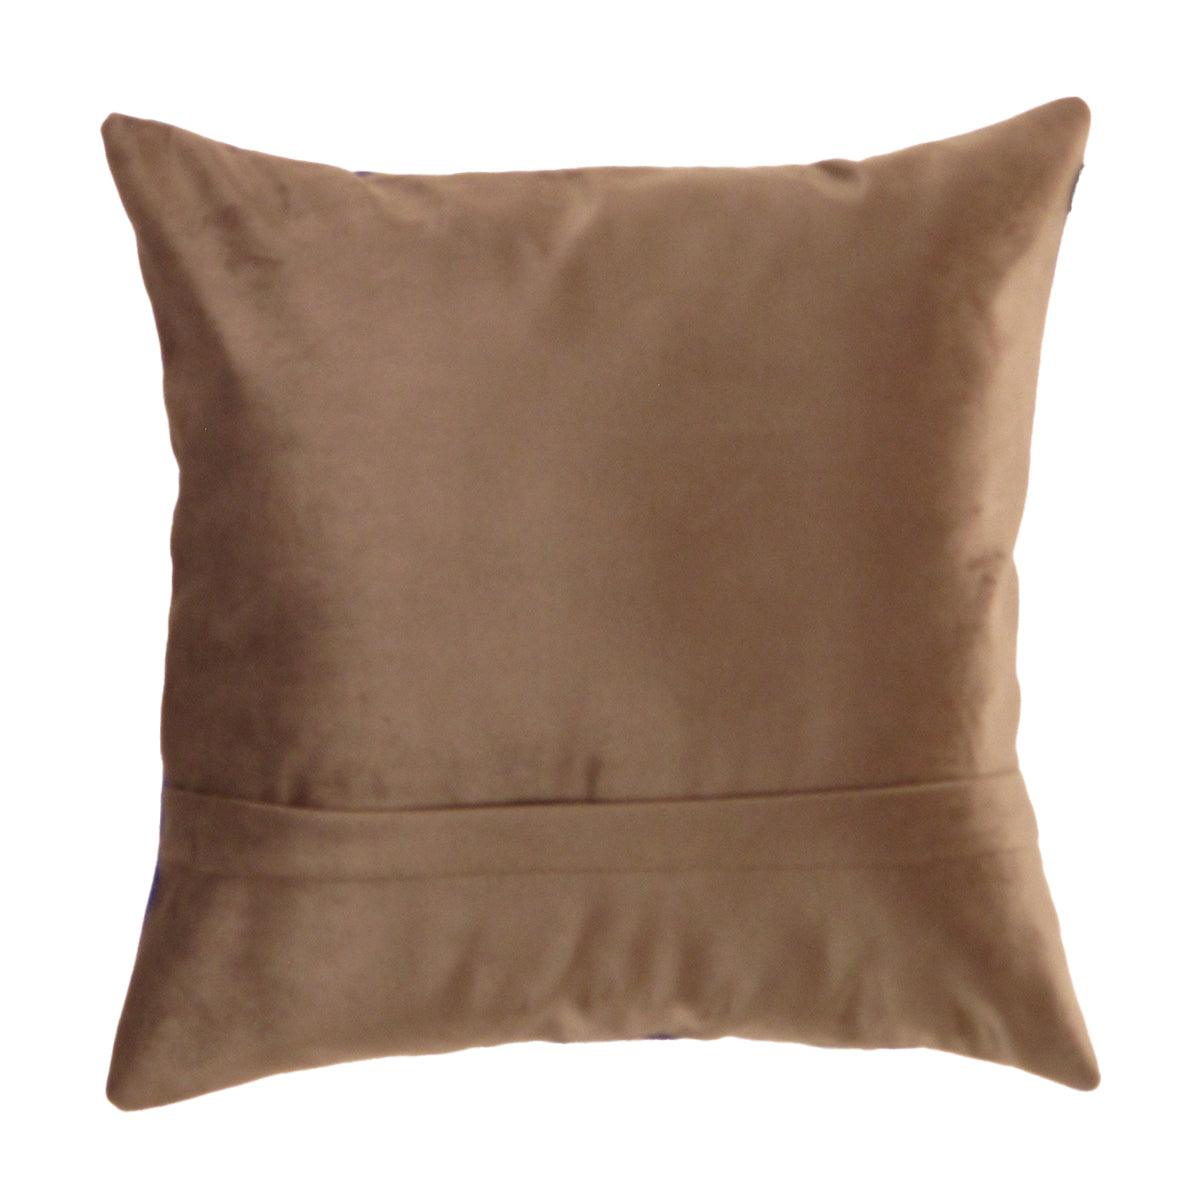 Canvello Traditional Velvet Pillow - 20' X 20' - Canvello